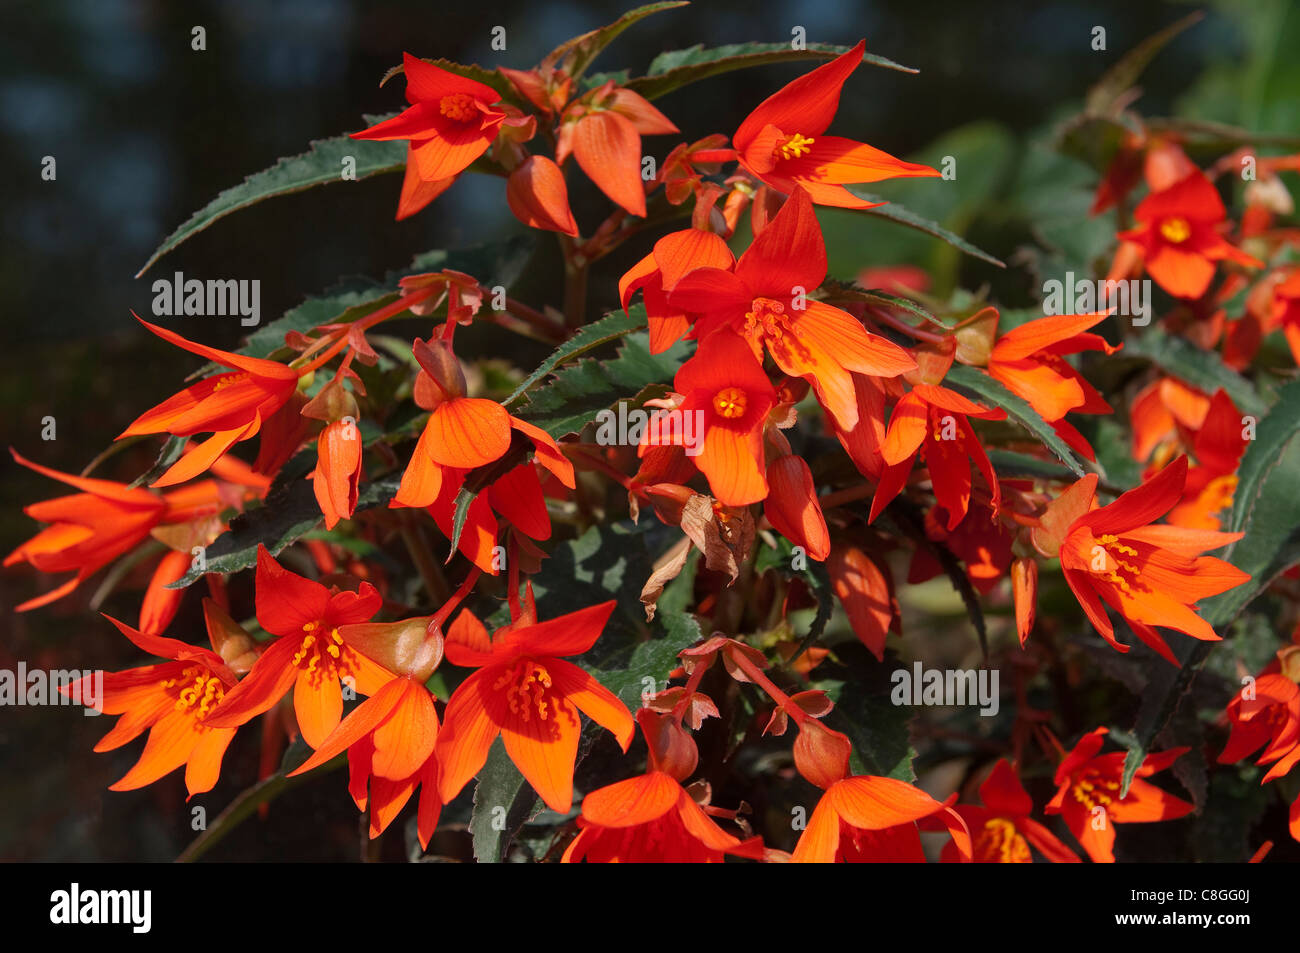 Bolivian Begonia (Begonia x boliviensis Crackling Fire Orange Red), orange flowers. Stock Photo